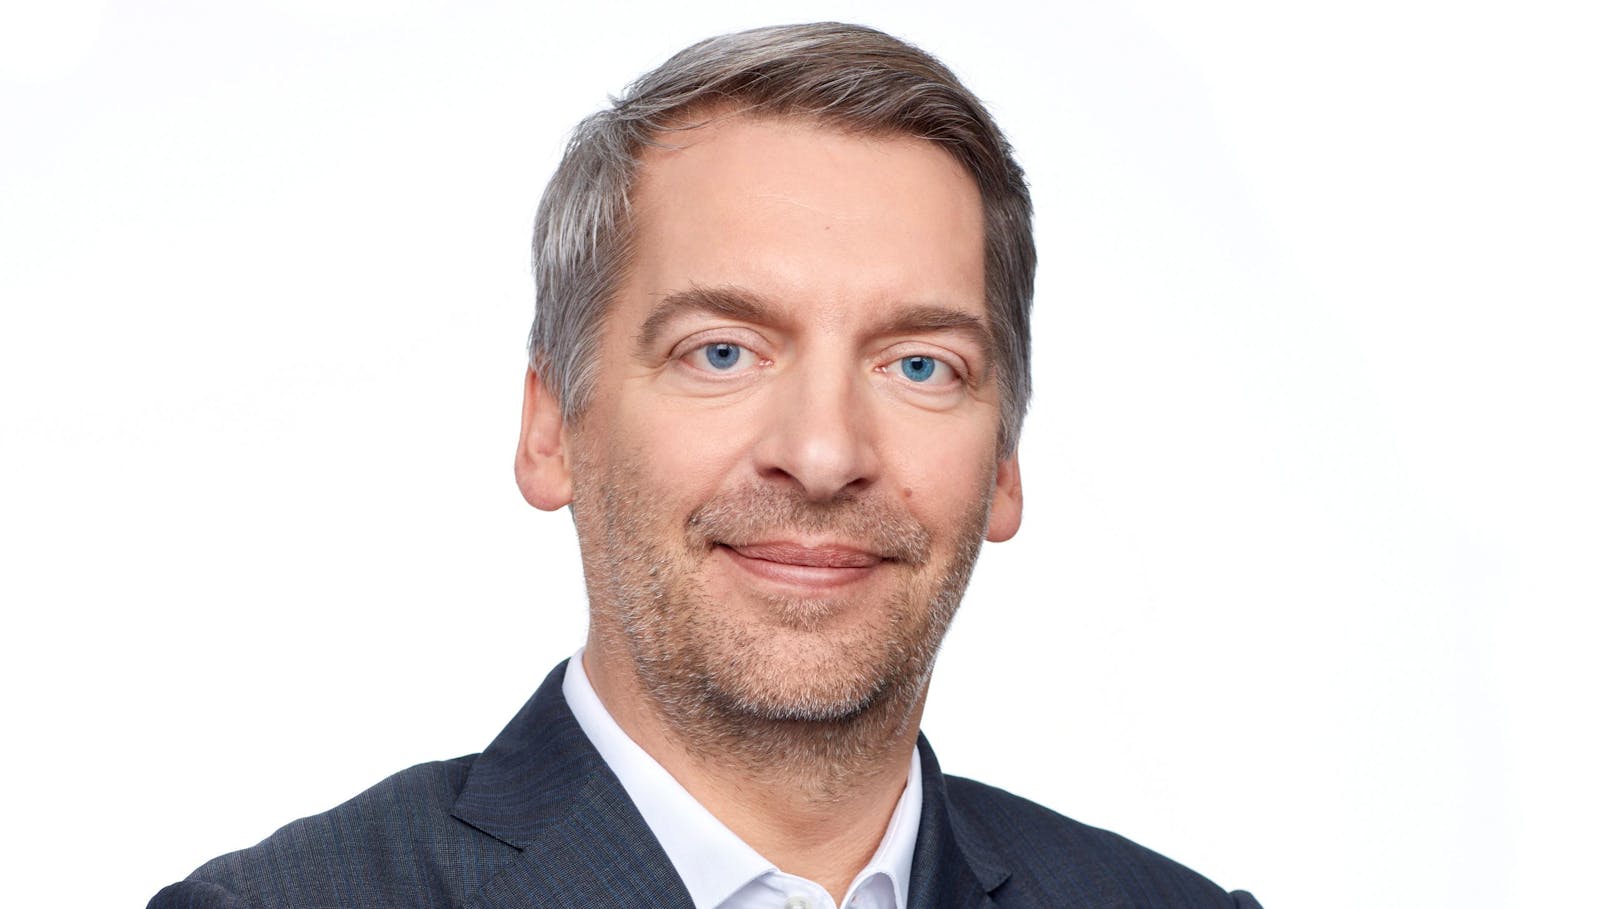 Andreas Hladky, Partner und Health Care Lead bei PwC Österreich. 